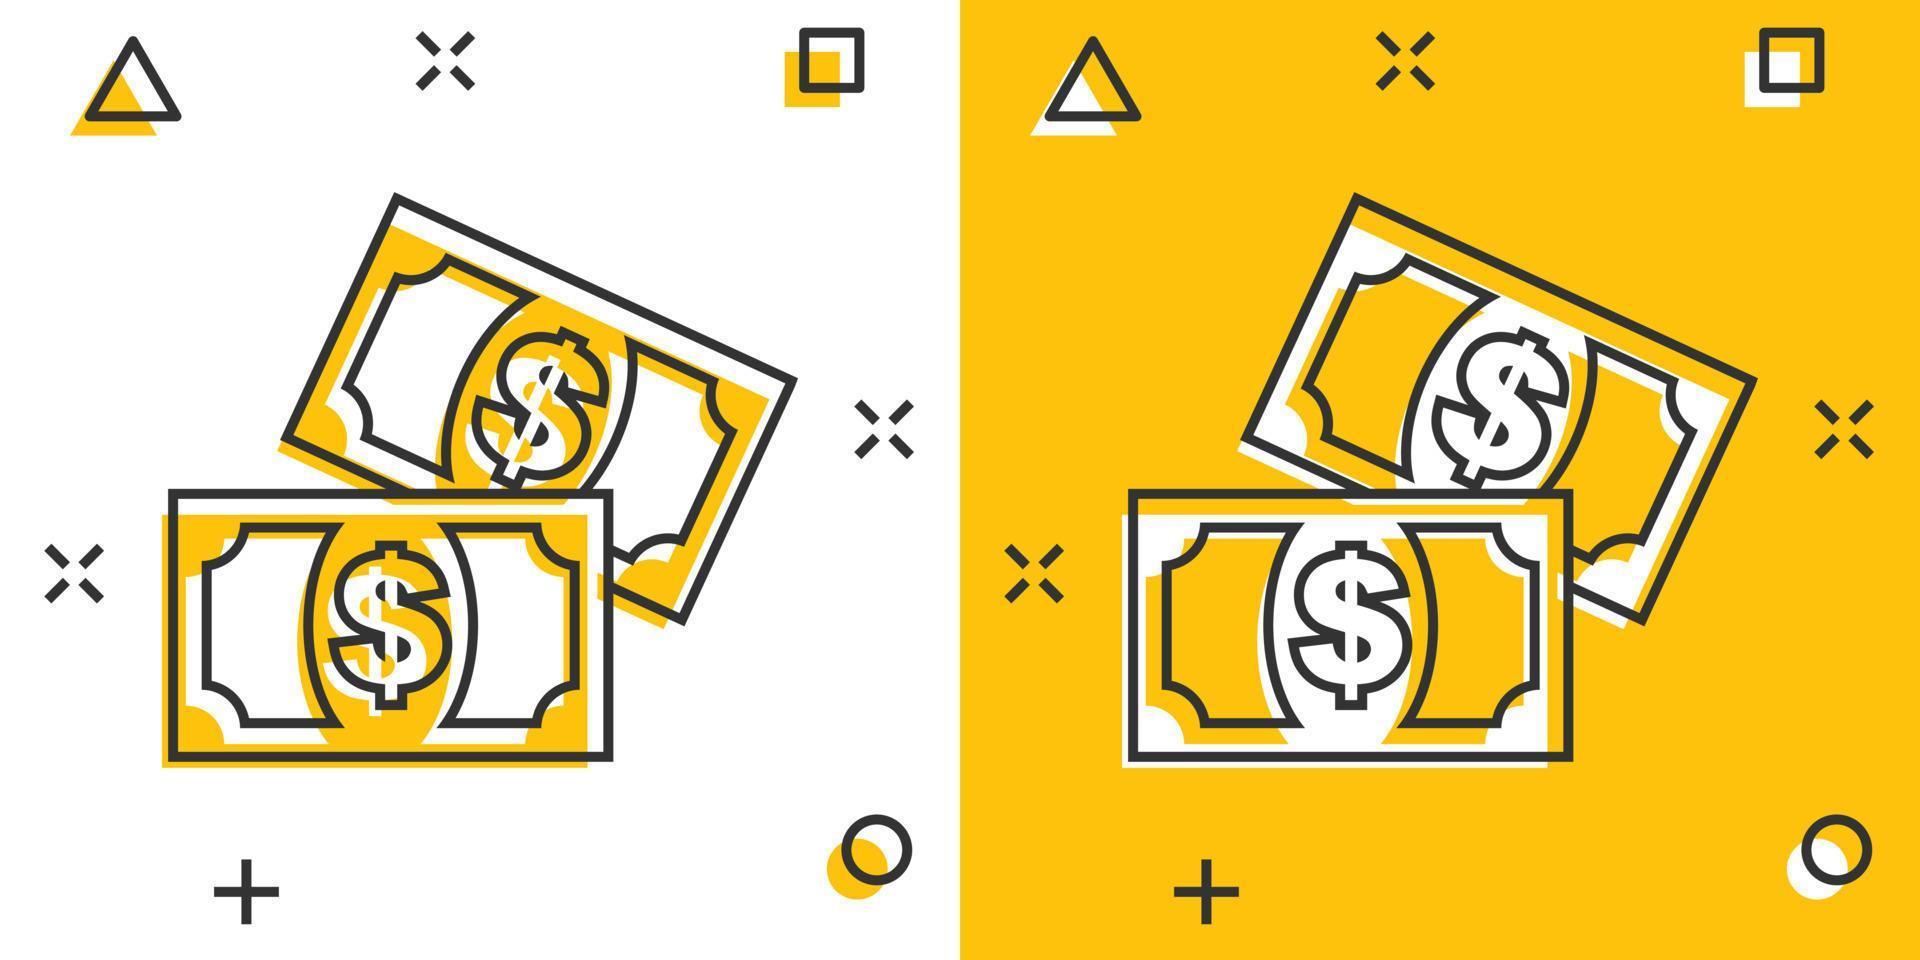 Cartoon money icon in comic style. Dollar money sign illustration pictogram. Coin splash business concept. vector